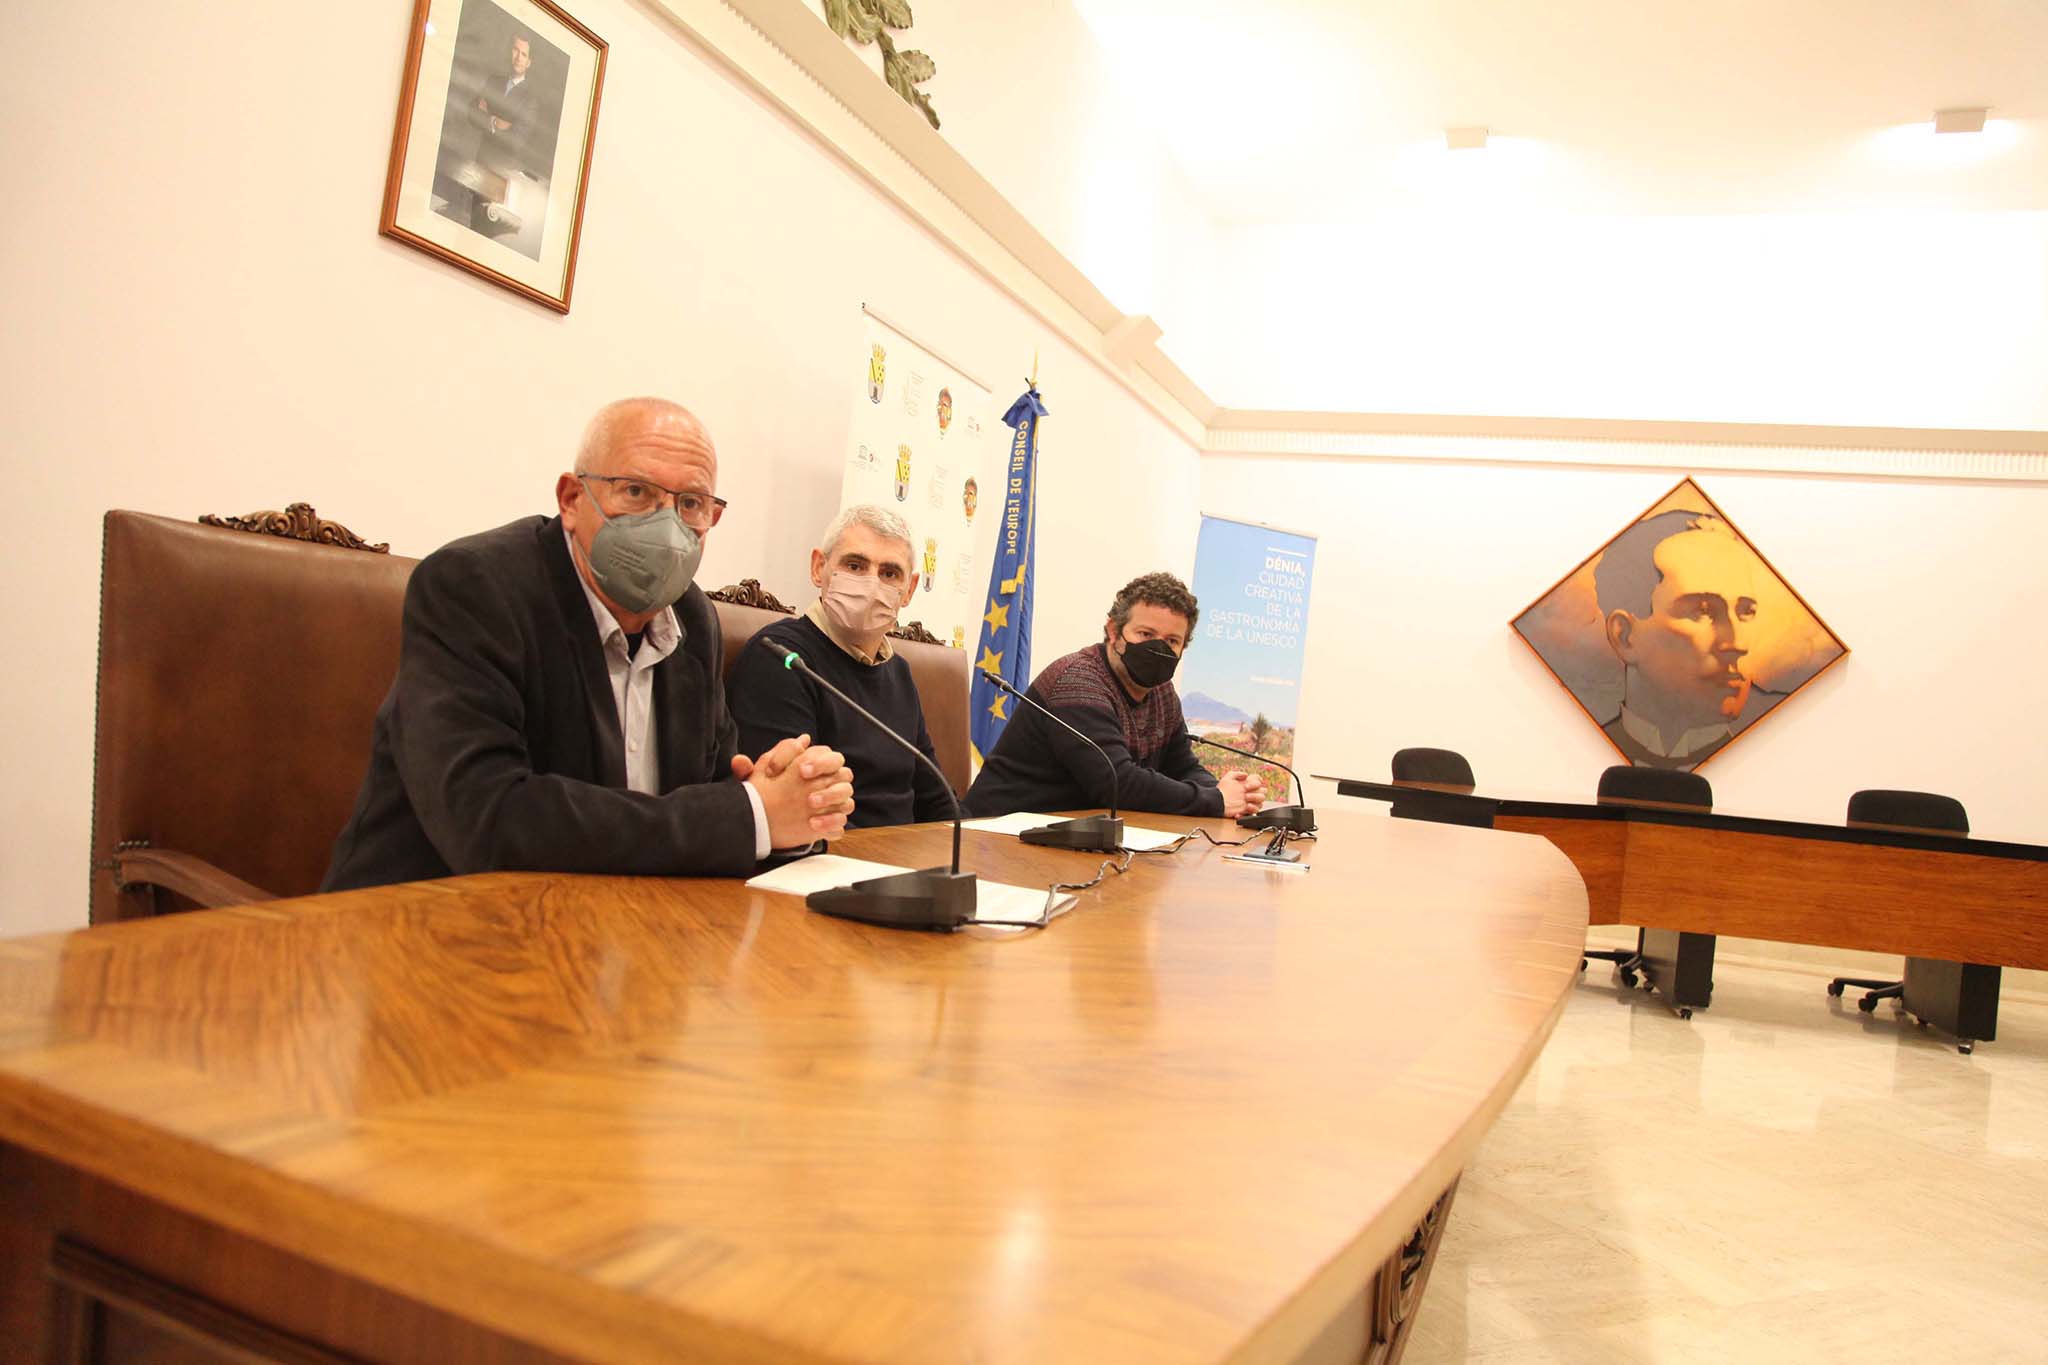 Vicent Grimalt junto a Jaume Bertomeu, presidente de la Junta Local Fallera, y Óscar Mengual